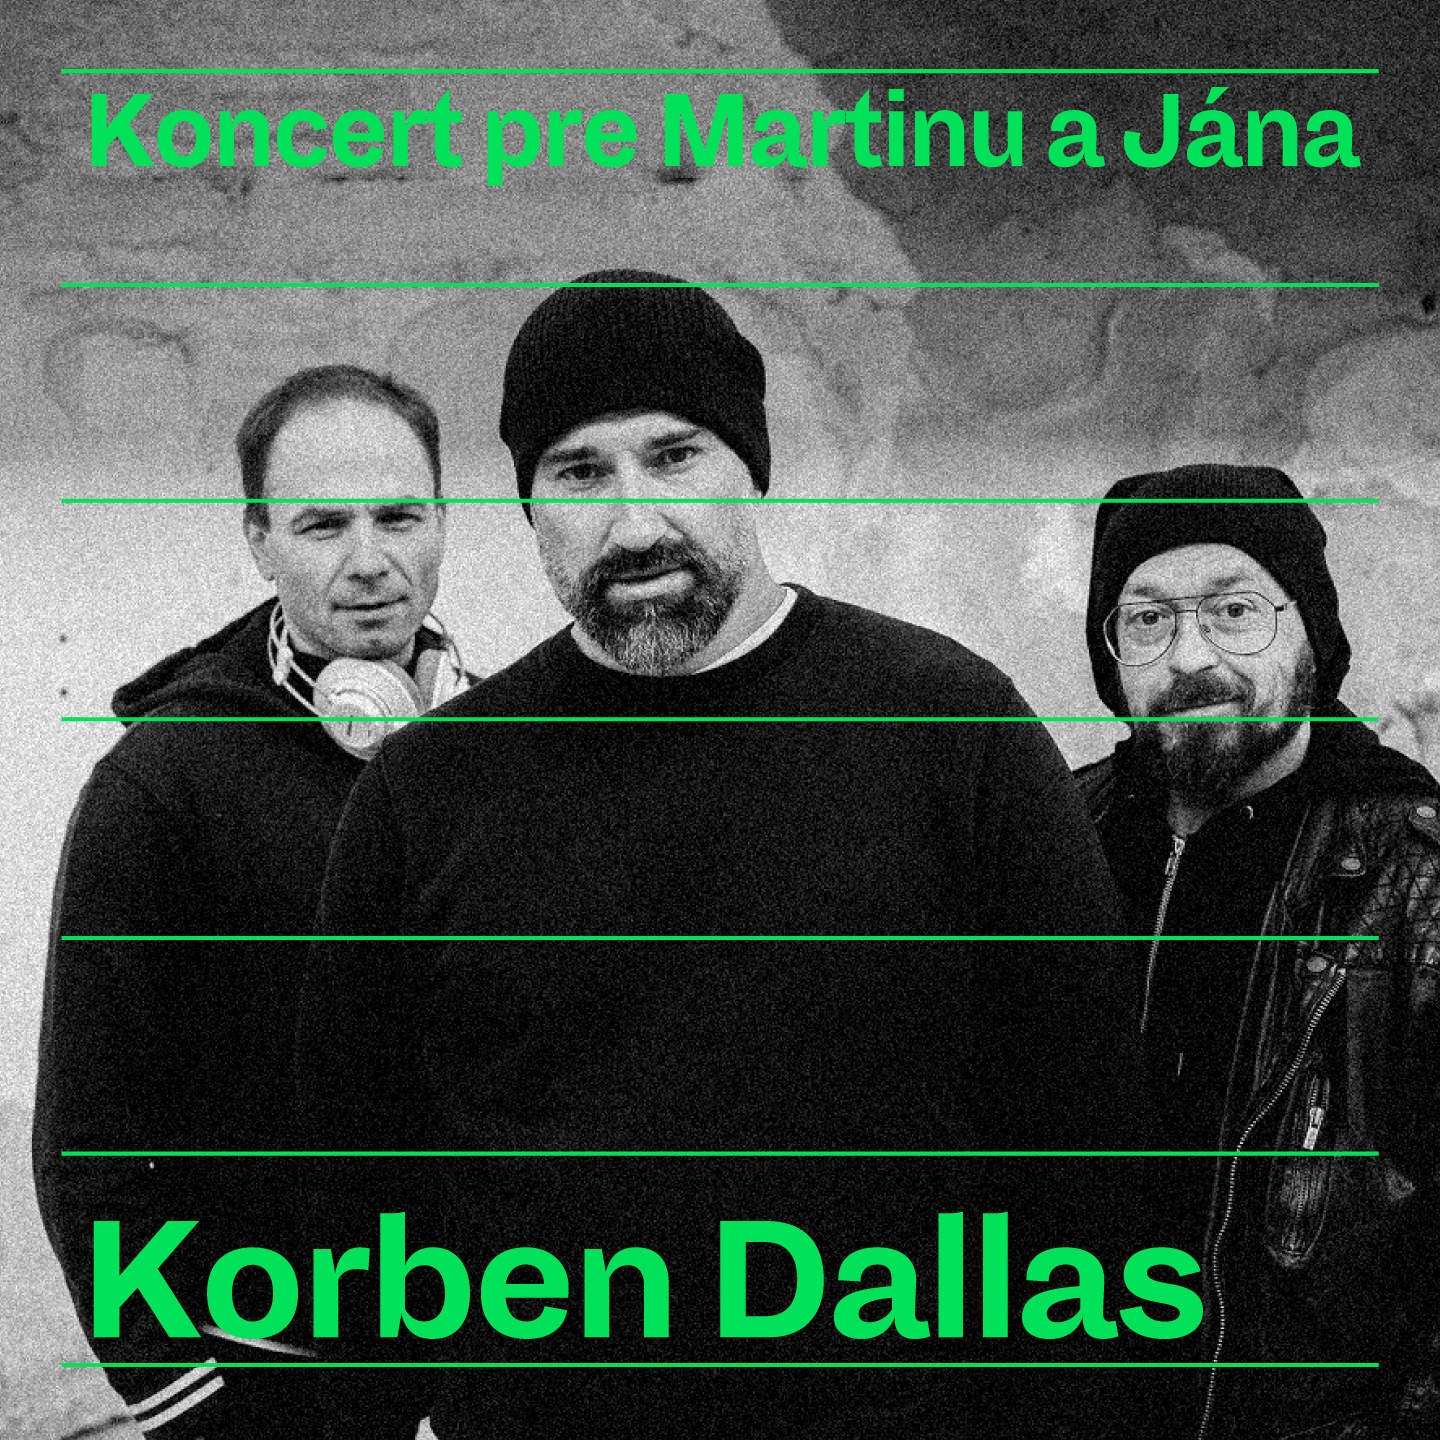 Korben Dallas